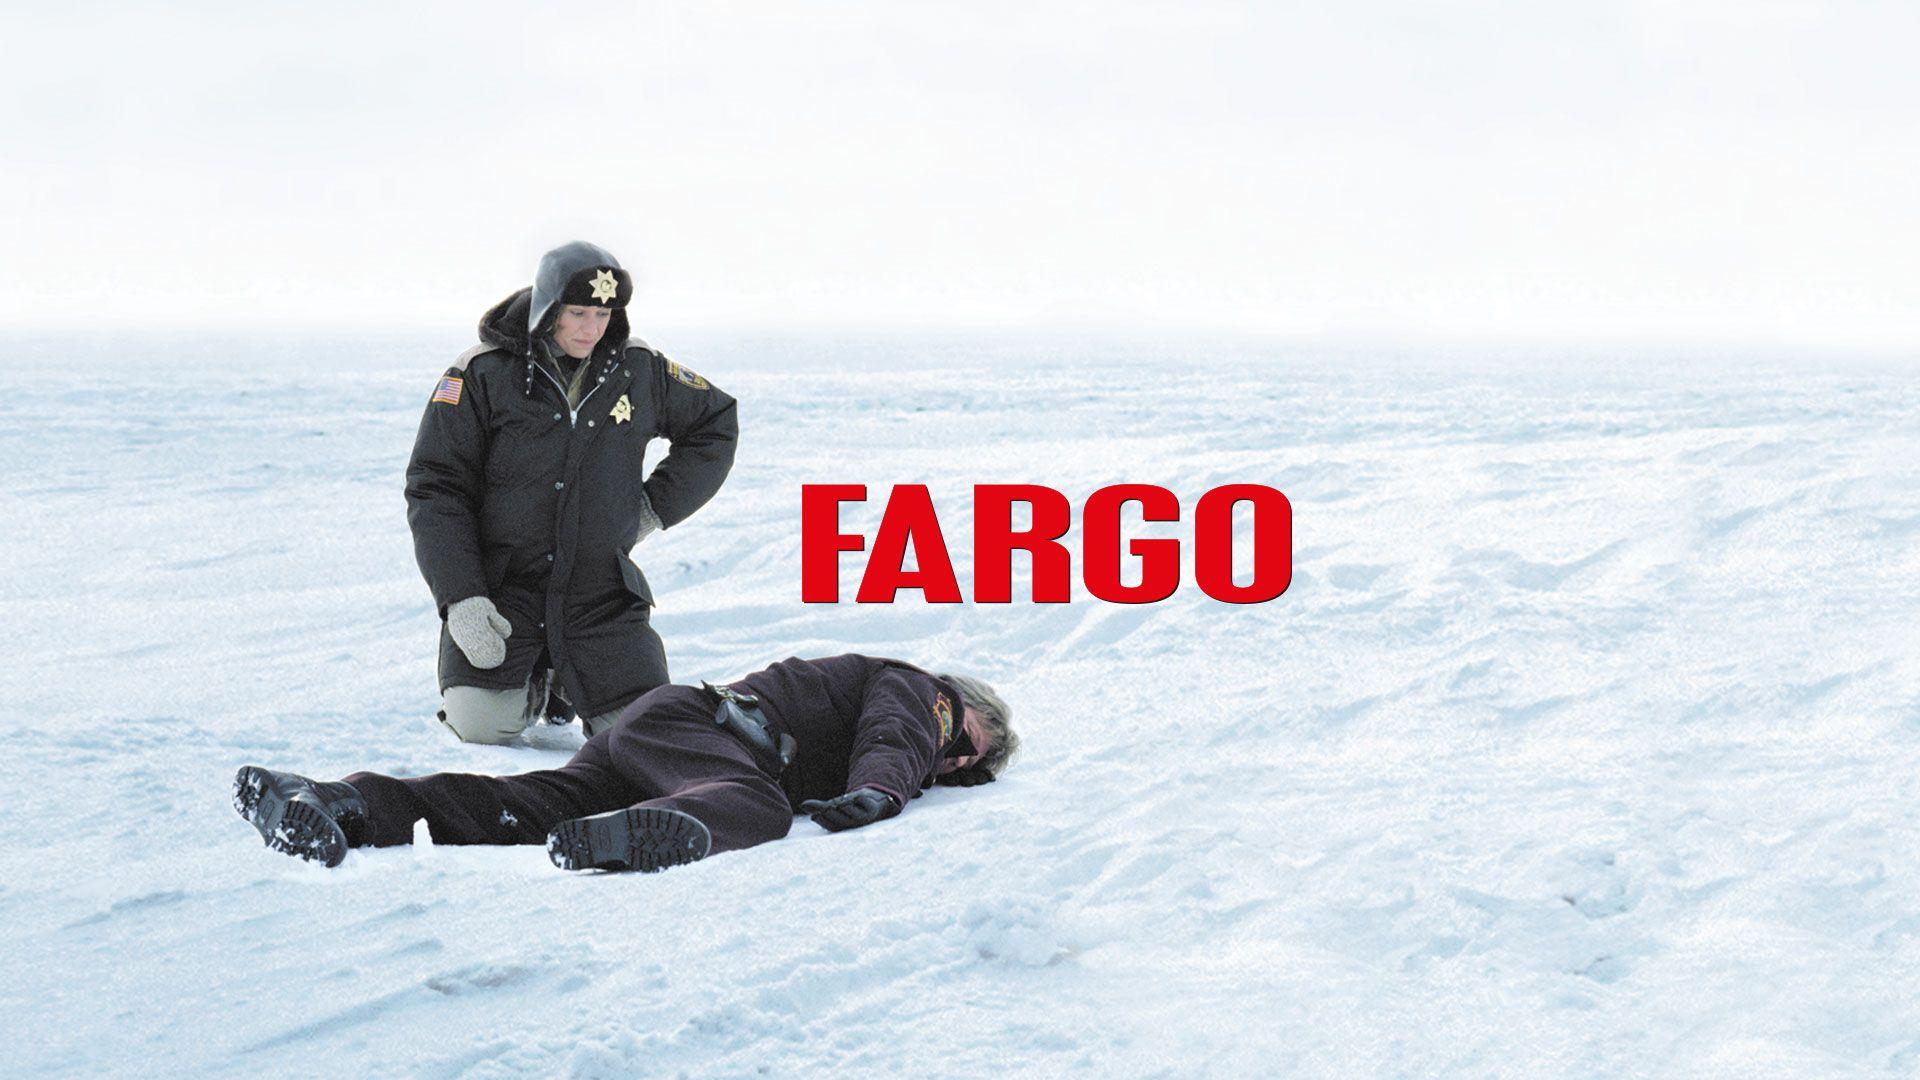 Tag: High Quality Fargo Wallpaper, Fargo Wallpaper, Background